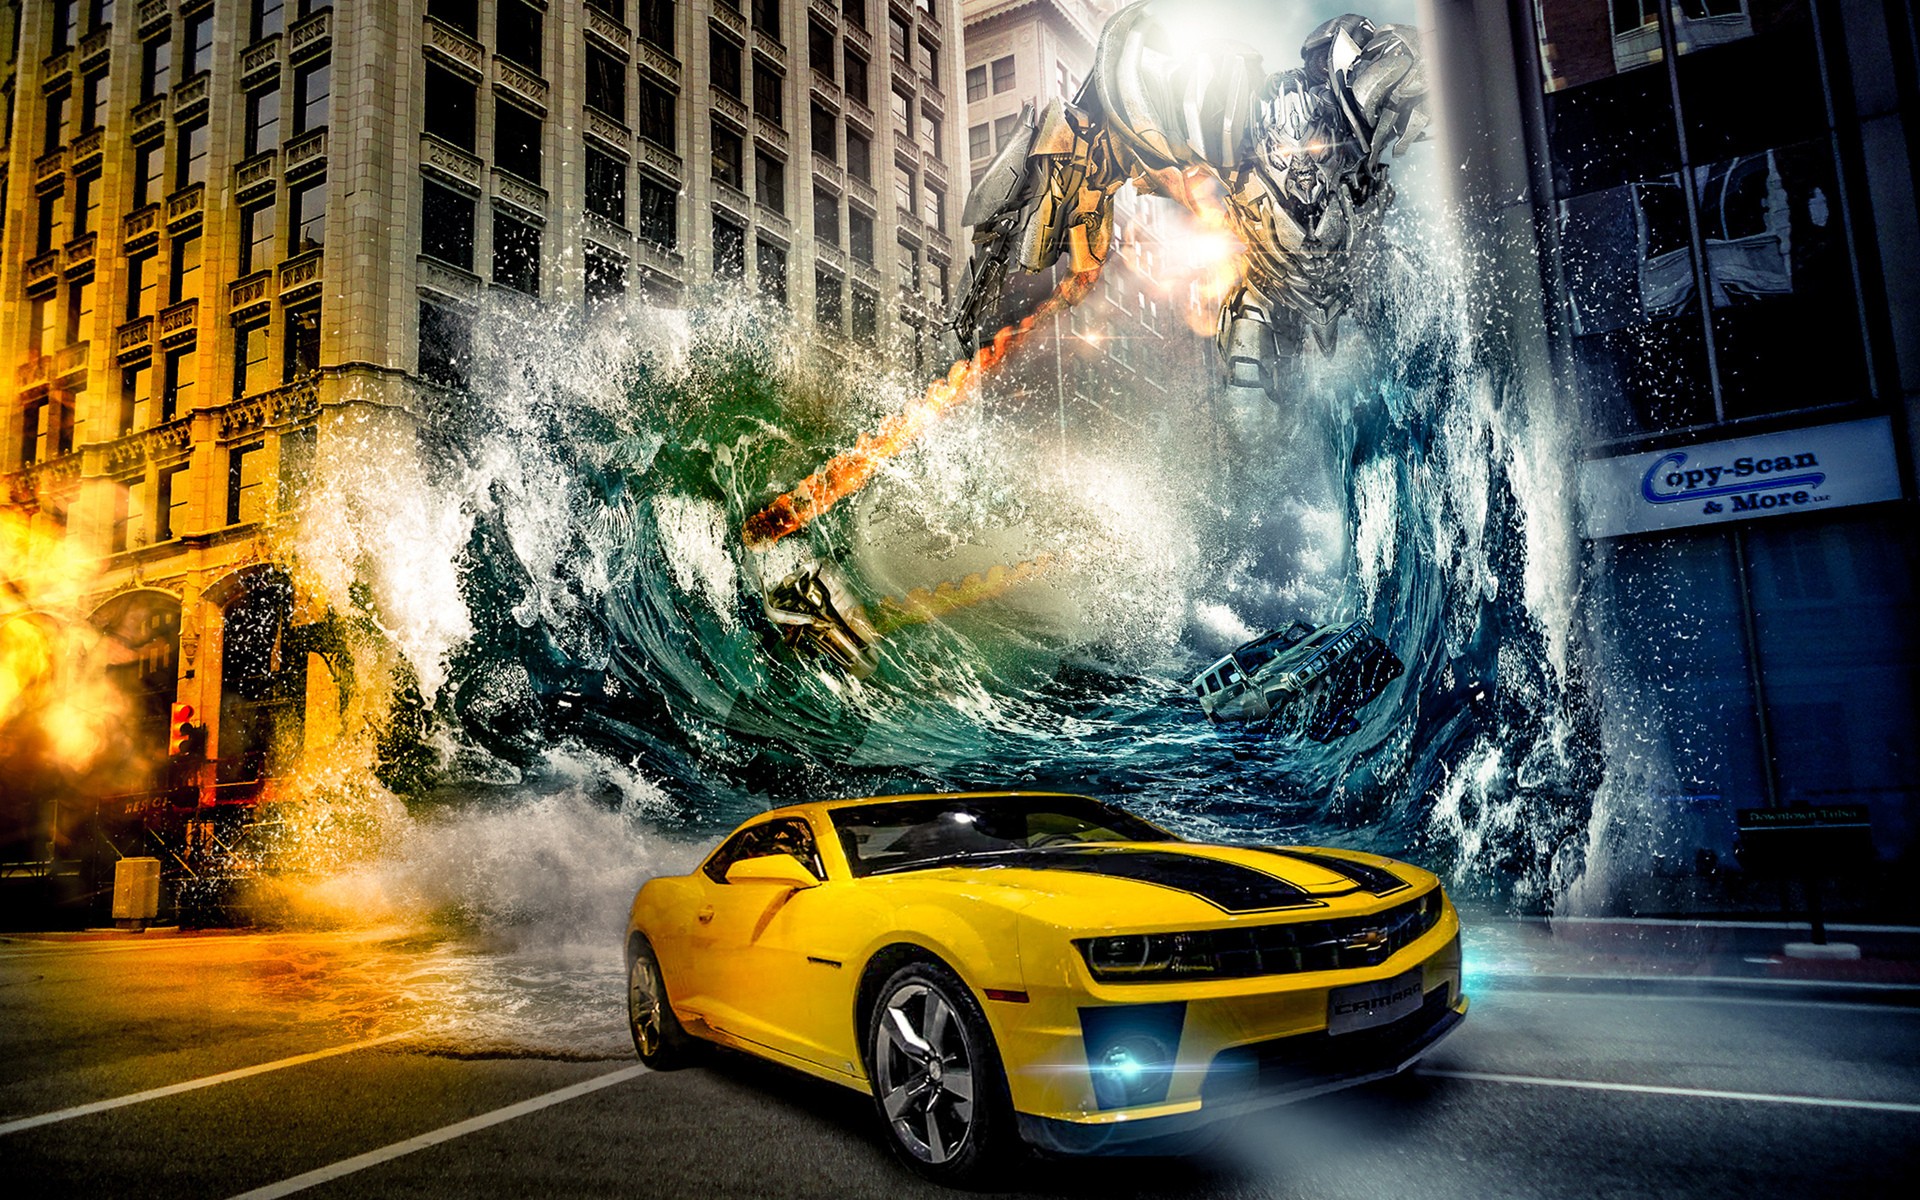 General 1920x1200 city vehicle movies Transformers digital art building frontal view water robot street headlights